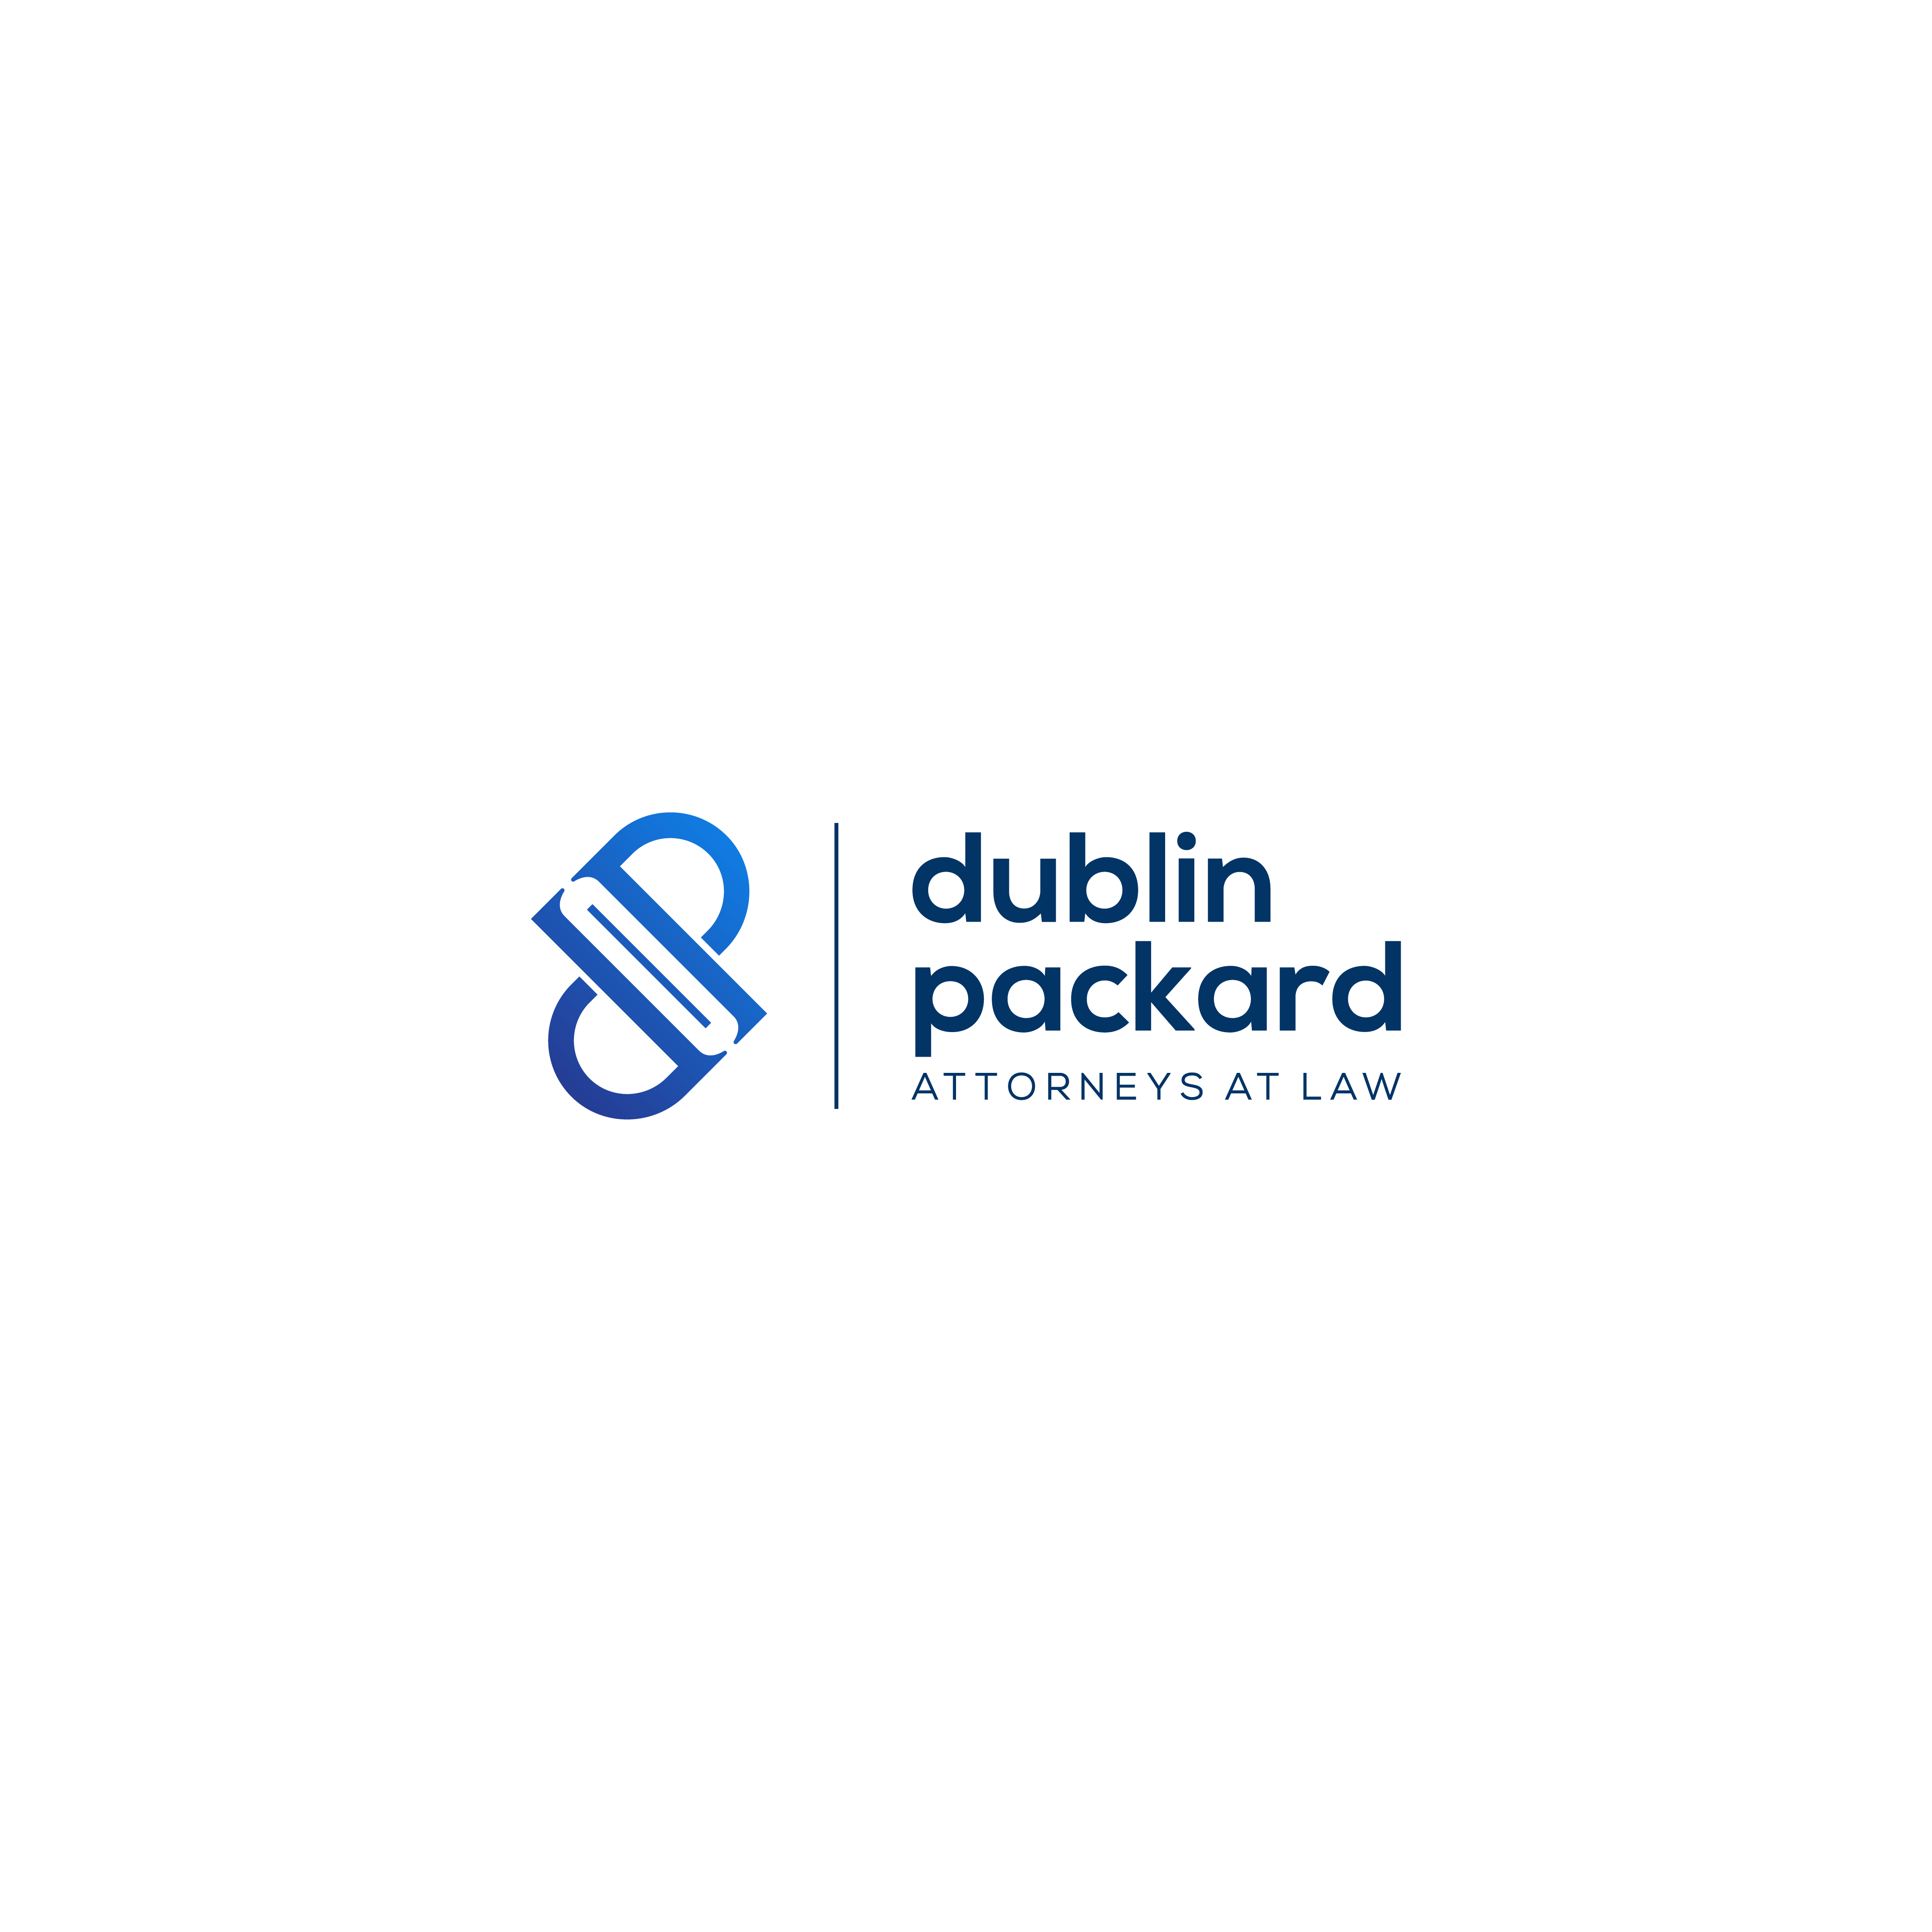 Dublin Packard Estate Planning Attorneys